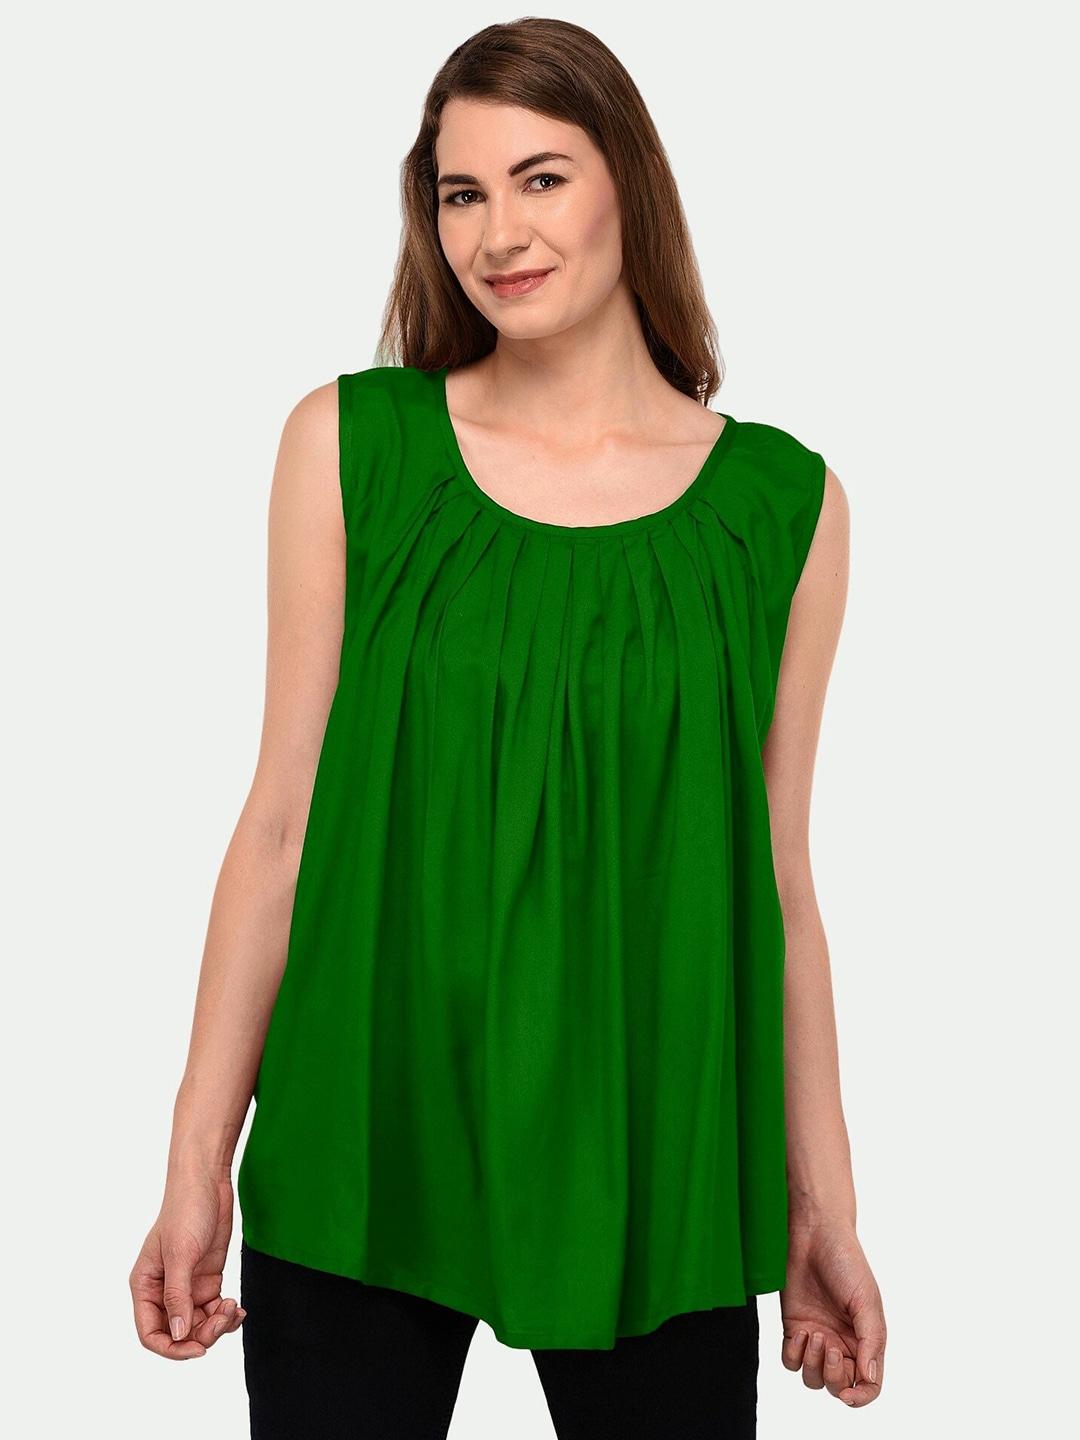 patrorna-women-green-solid-round-neck-sleeveless-cotton-blend-top